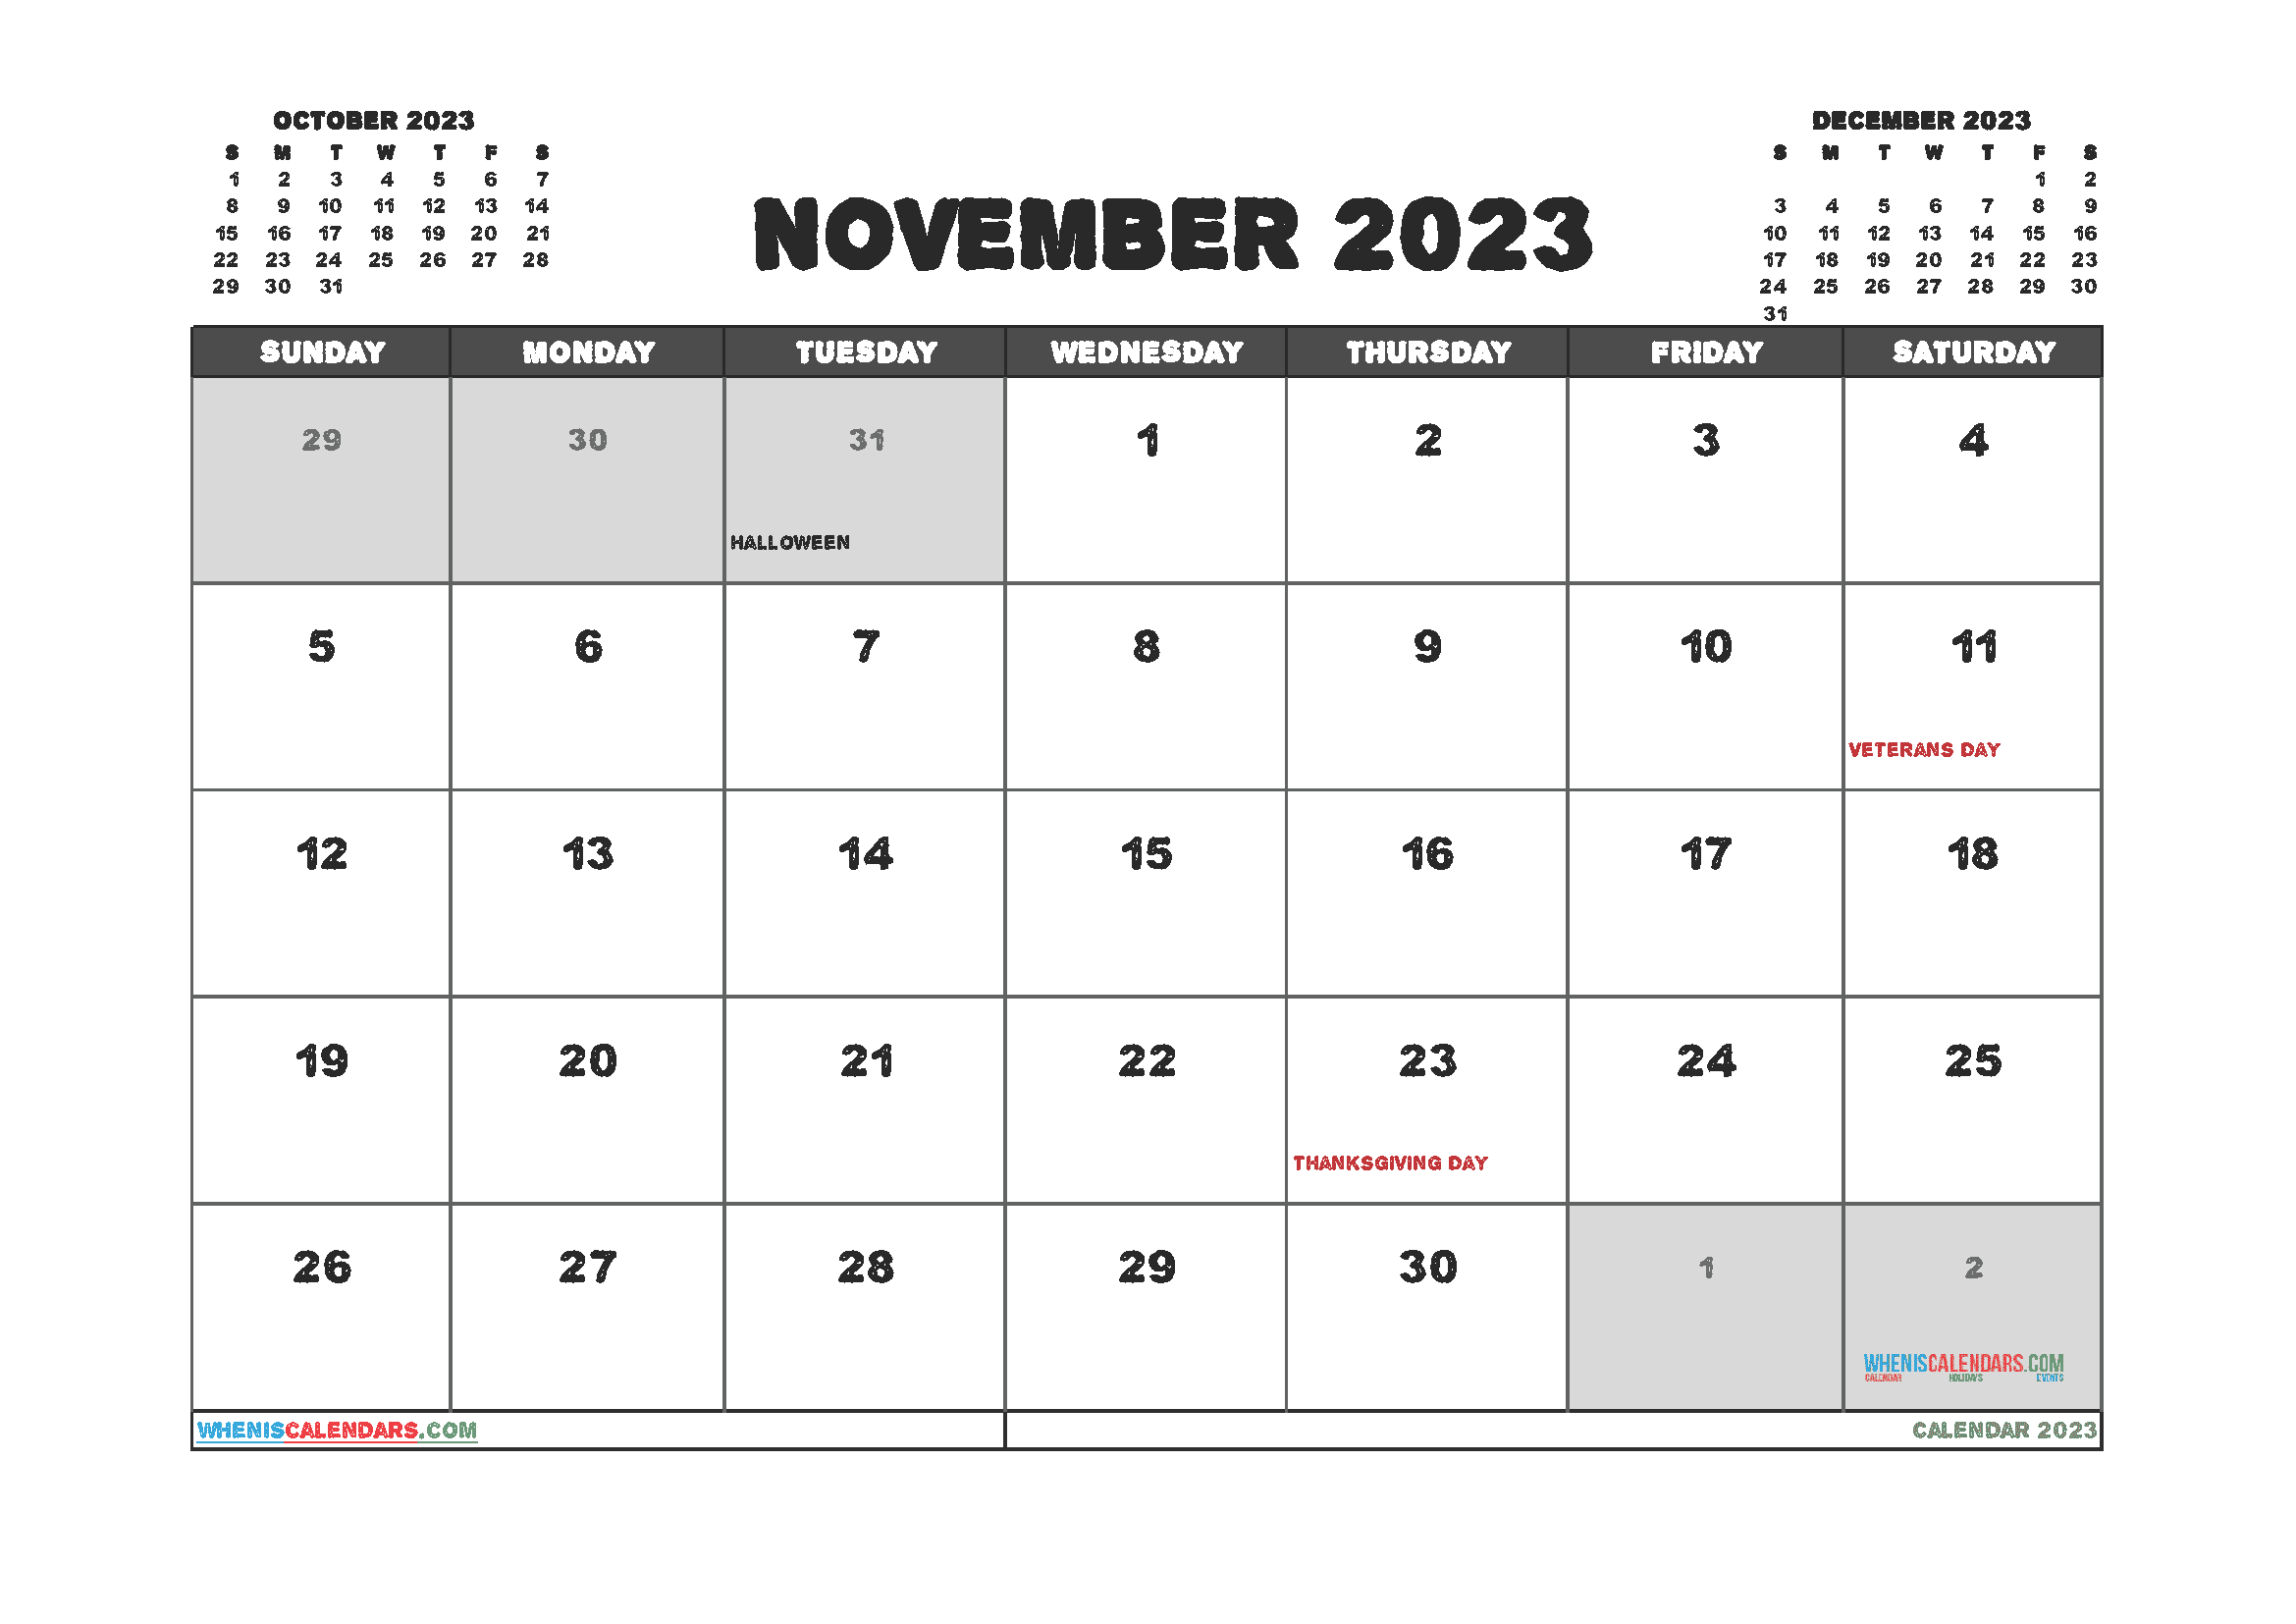 Free Calendar November 2023 Printable